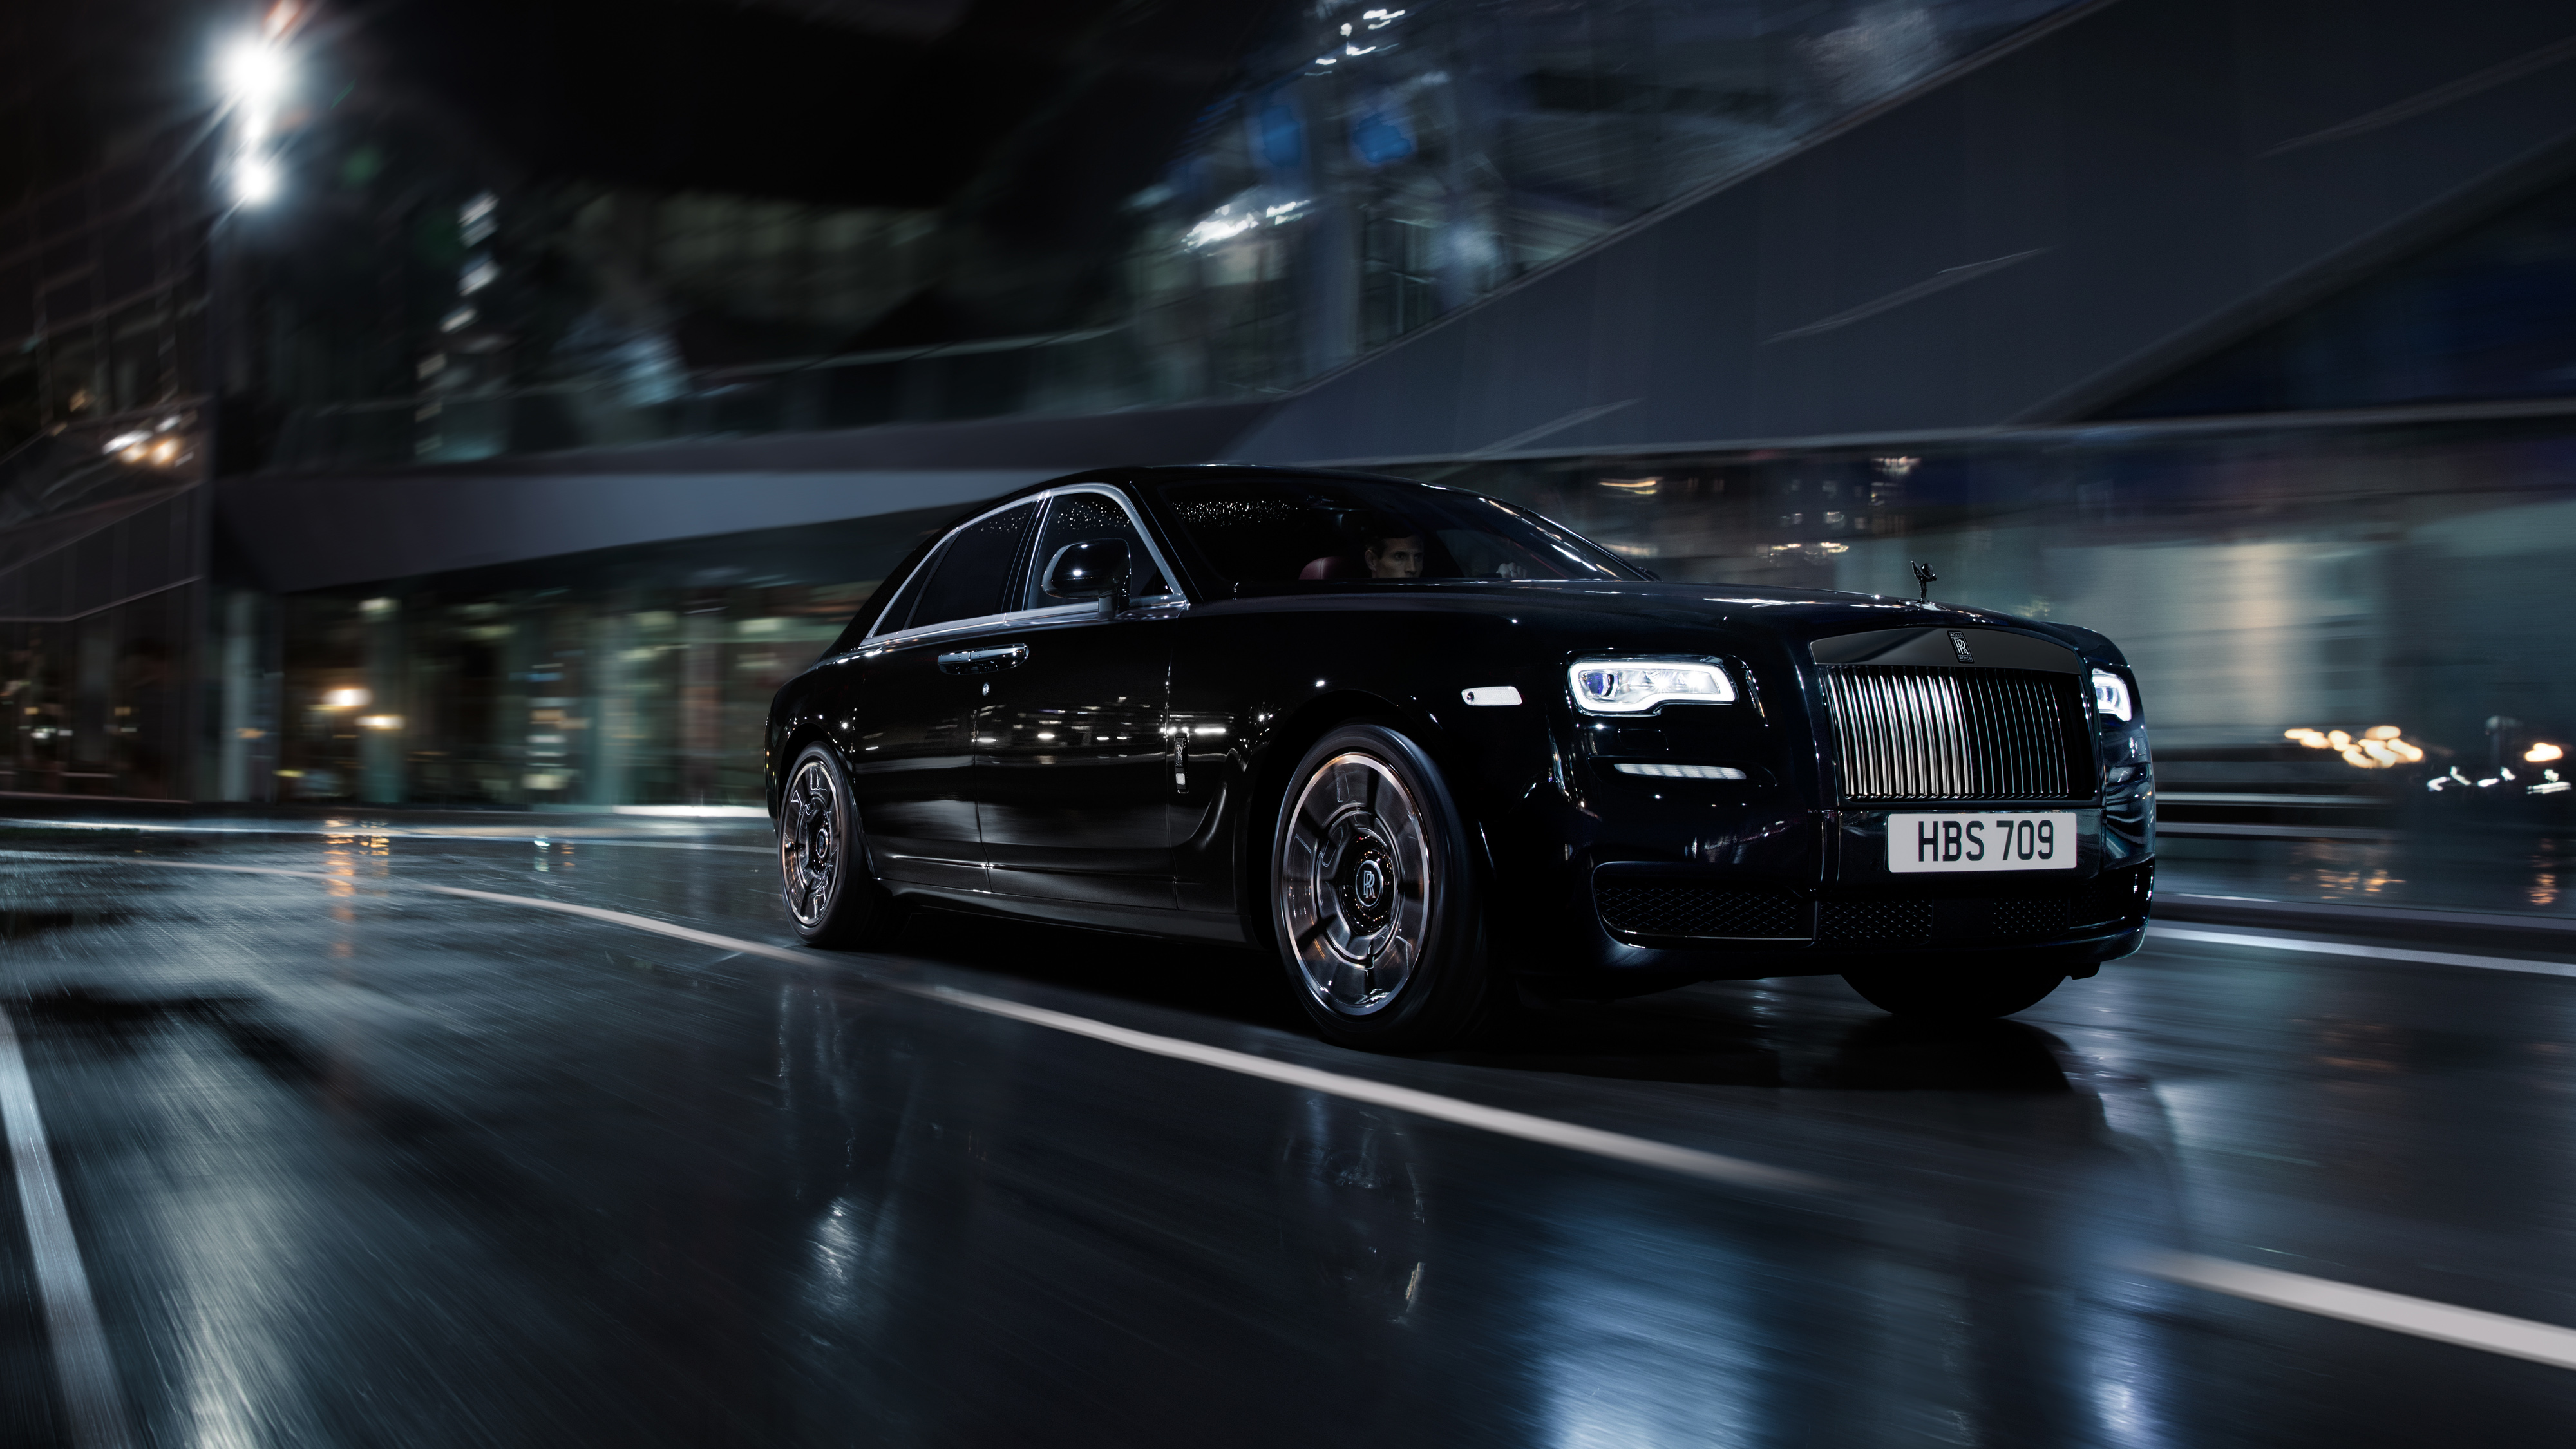 Rolls Royce Phantom Hire Manchester  RollsRoyce Hire Manchester